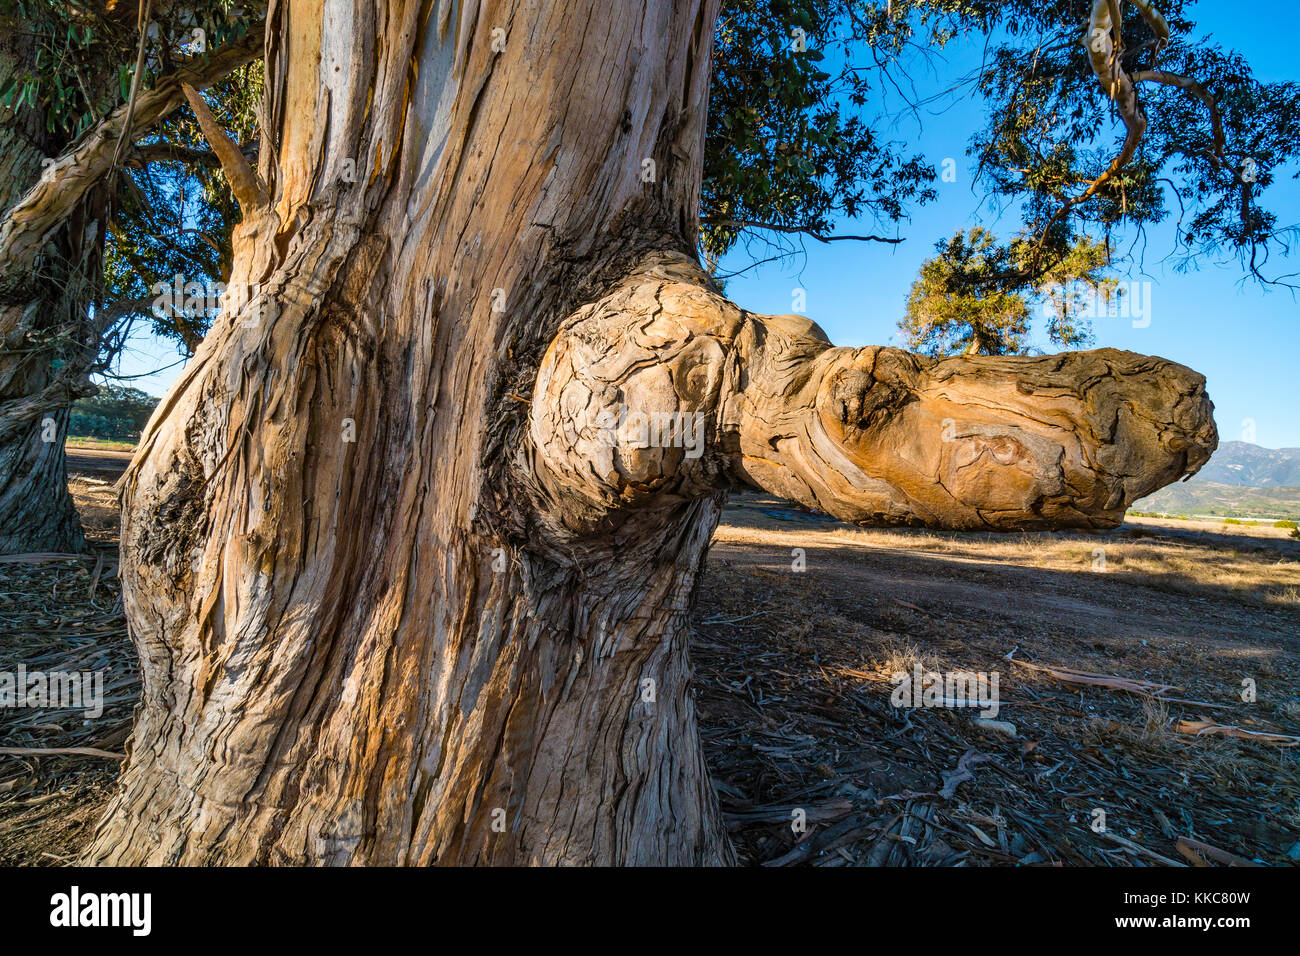 Nodose eucalipto tronco con ruvido e corteccia, Carpinteria Bluffs, Carpinteria, California. Foto Stock